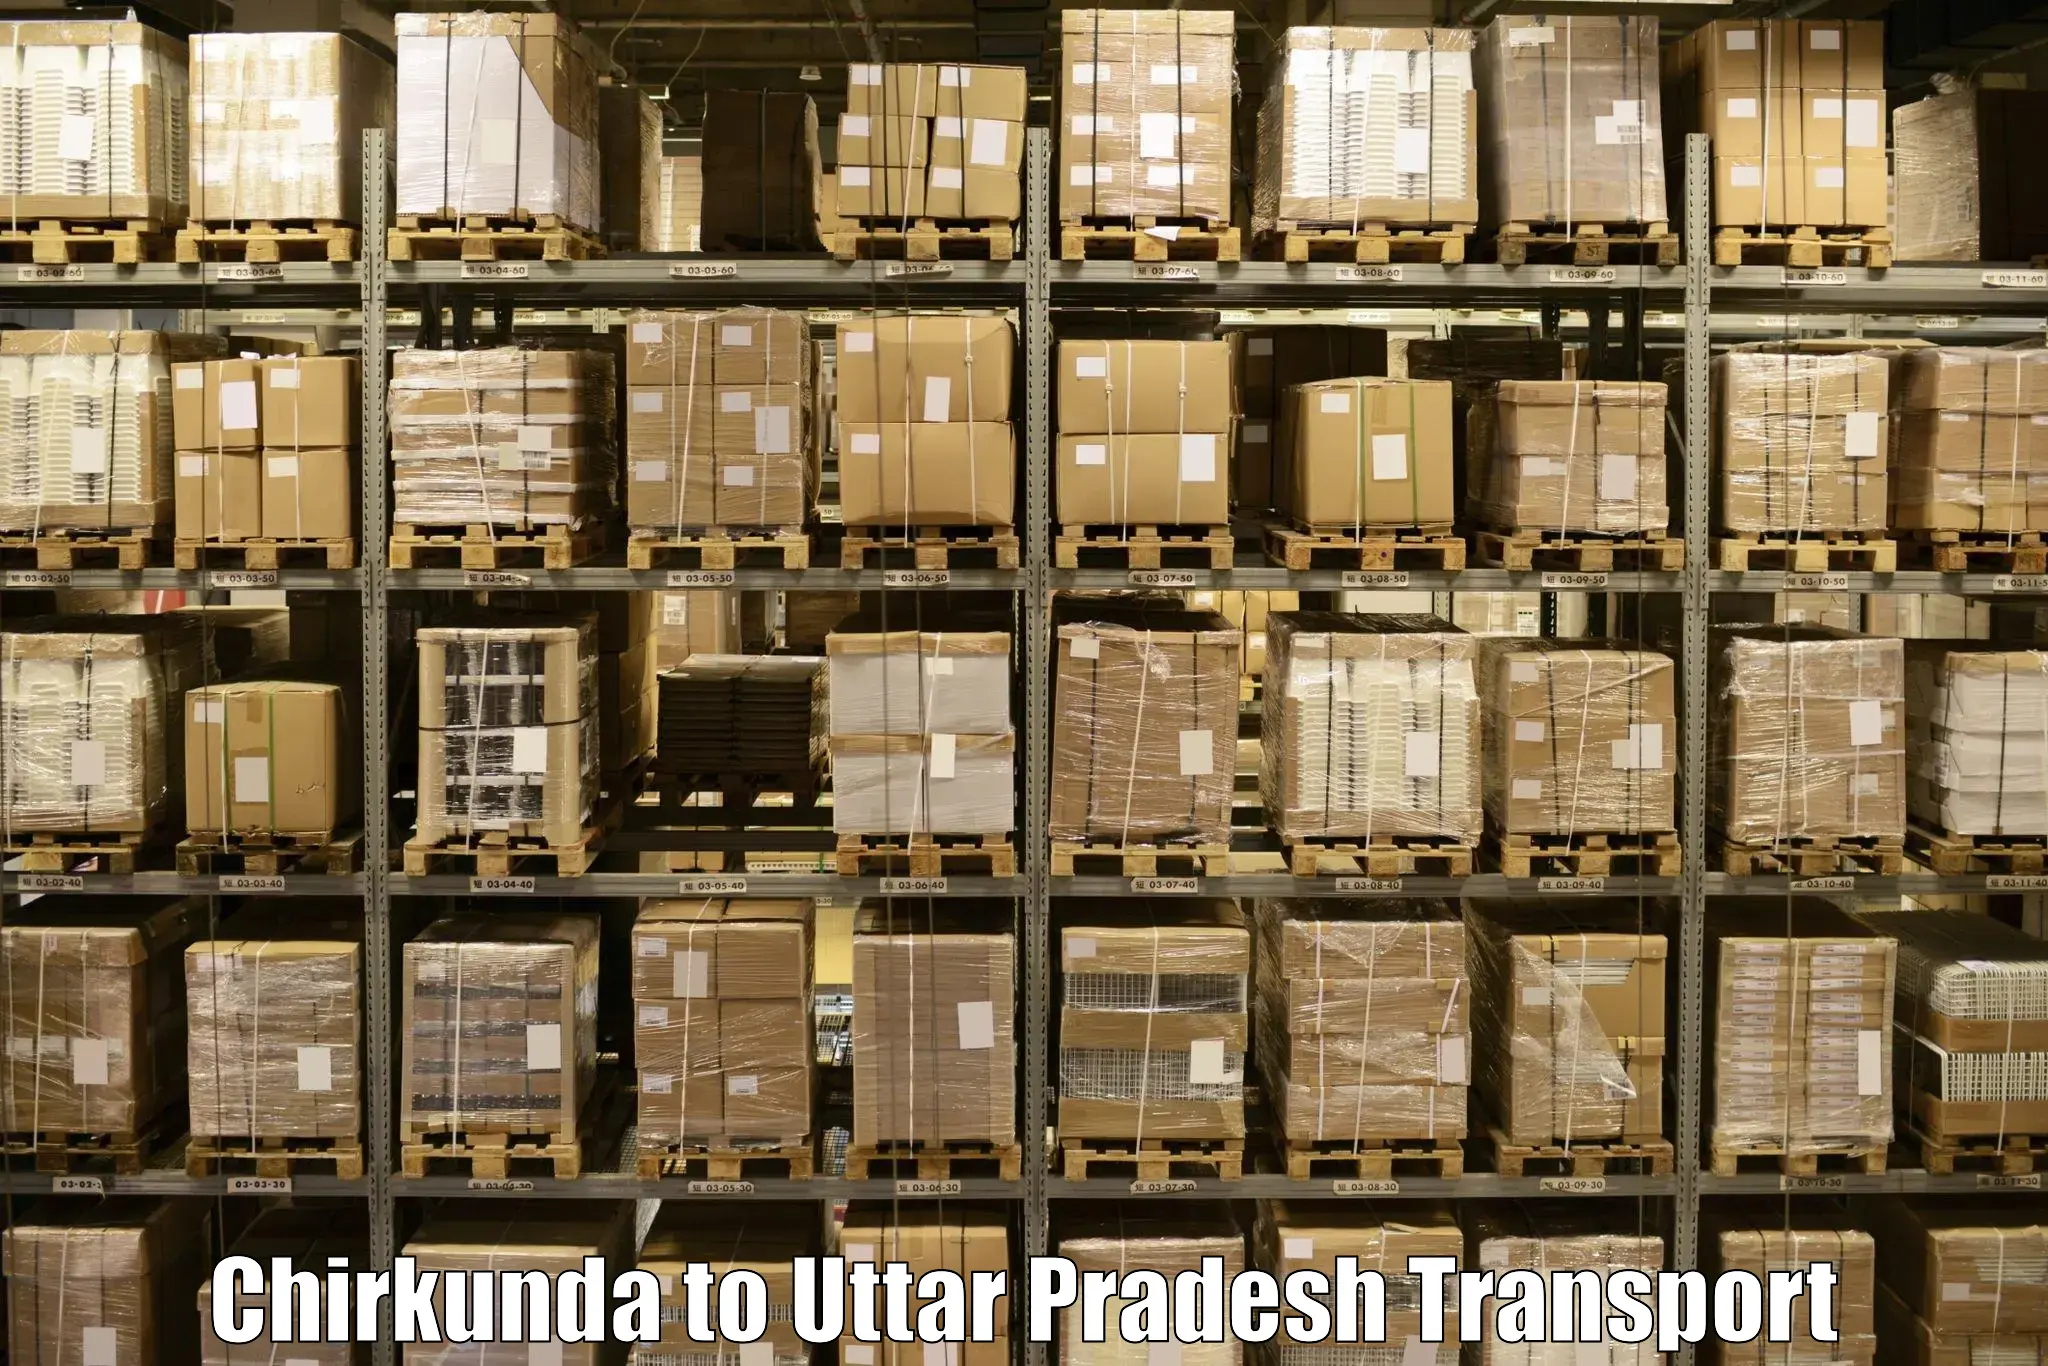 Daily parcel service transport in Chirkunda to Faizabad